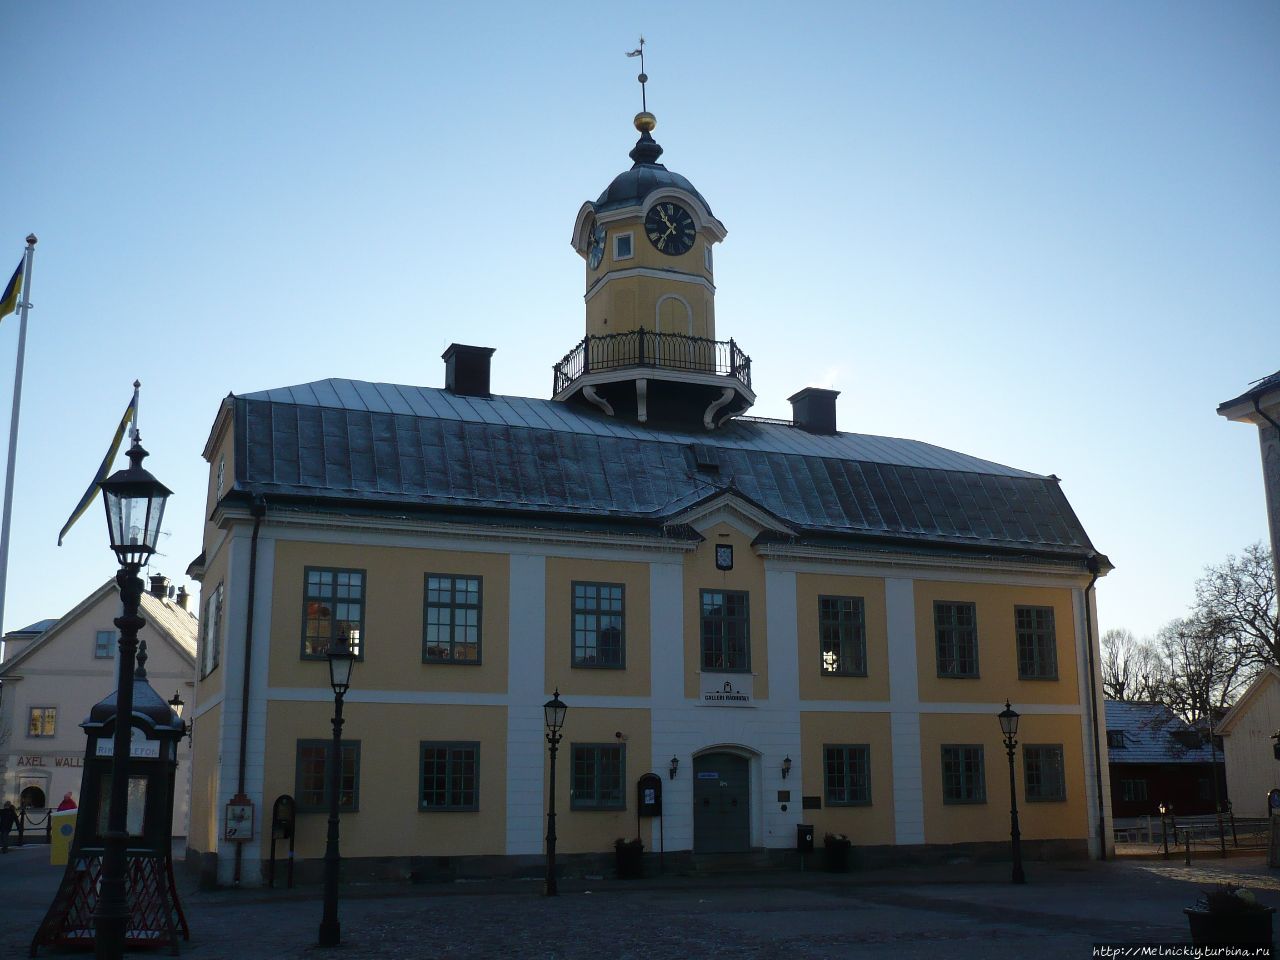 Городская ратуша Сёдерчёпинг, Швеция